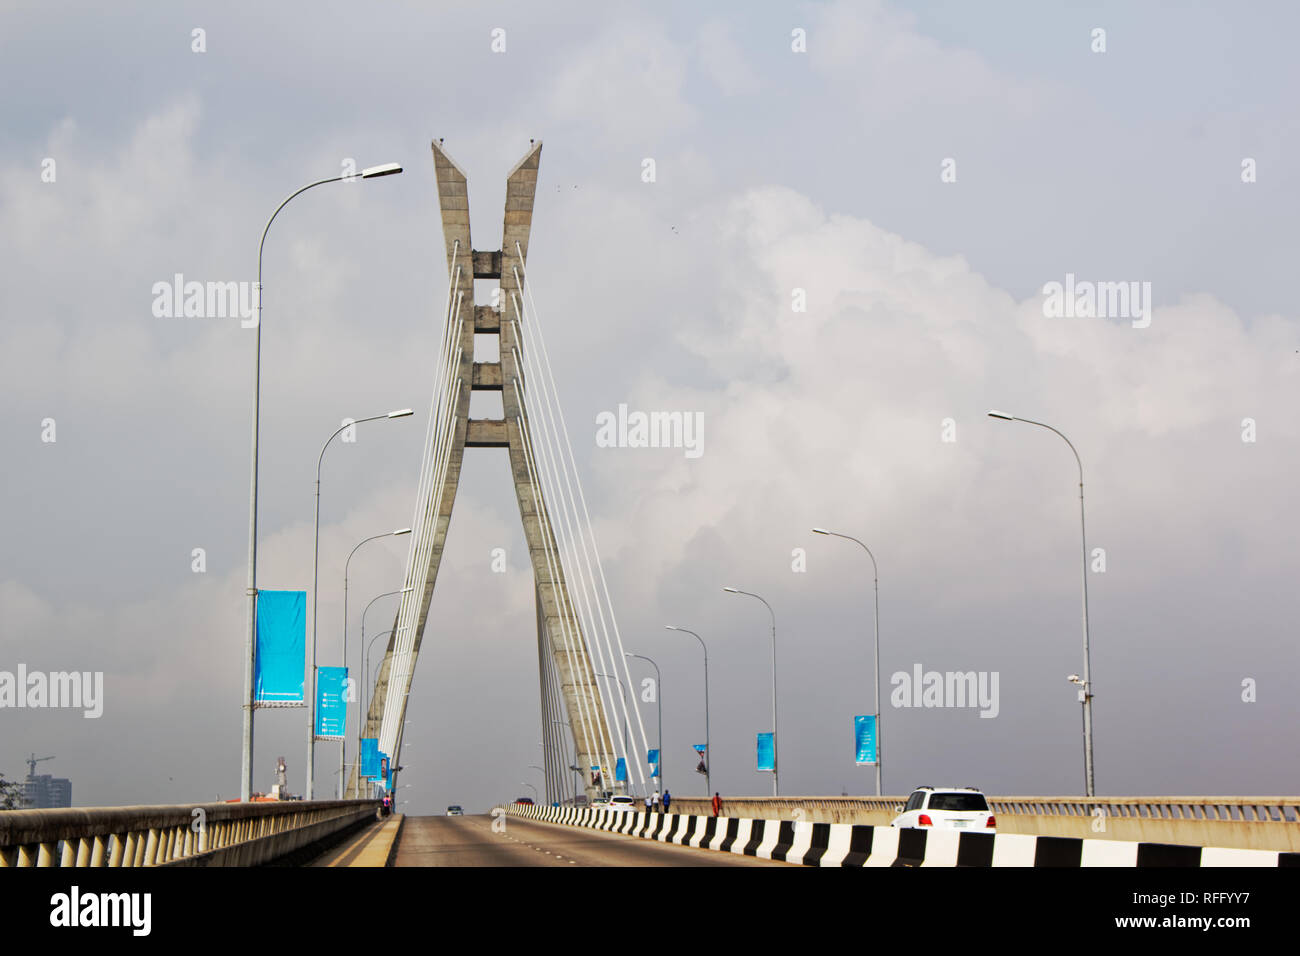 Ponte a pedaggio Lekki-Ikoyi, Lagos, Nigeria. Ponte sospeso. Foto Stock